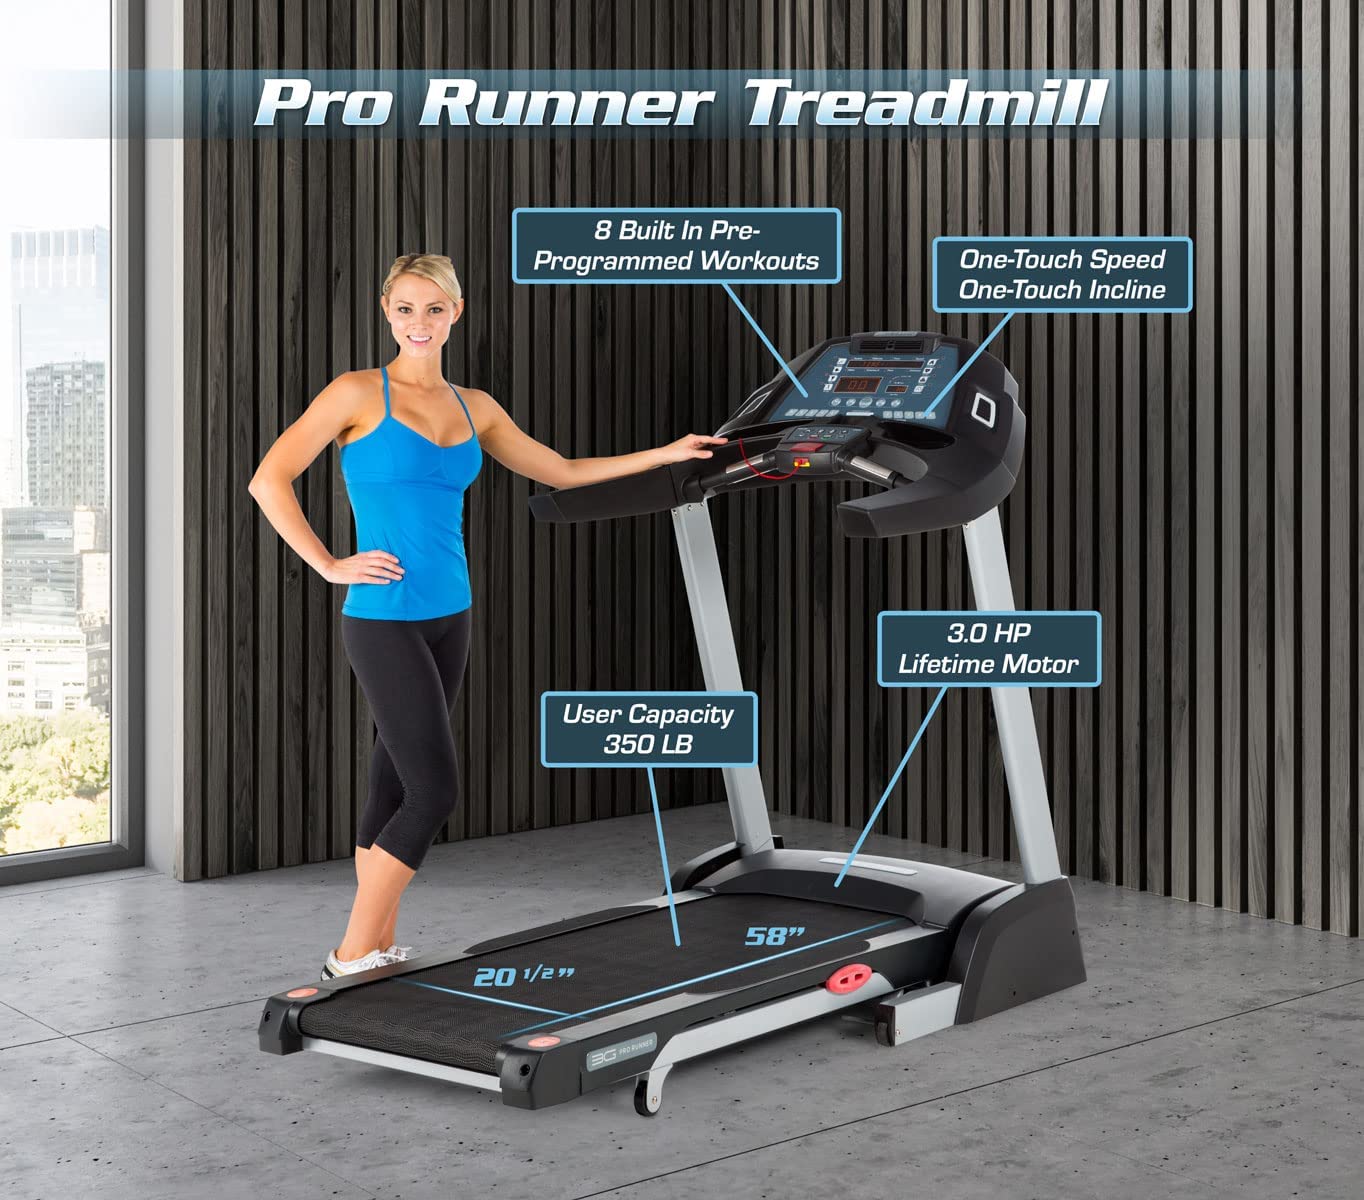 3G Cardio Pro Runner Treadmill features